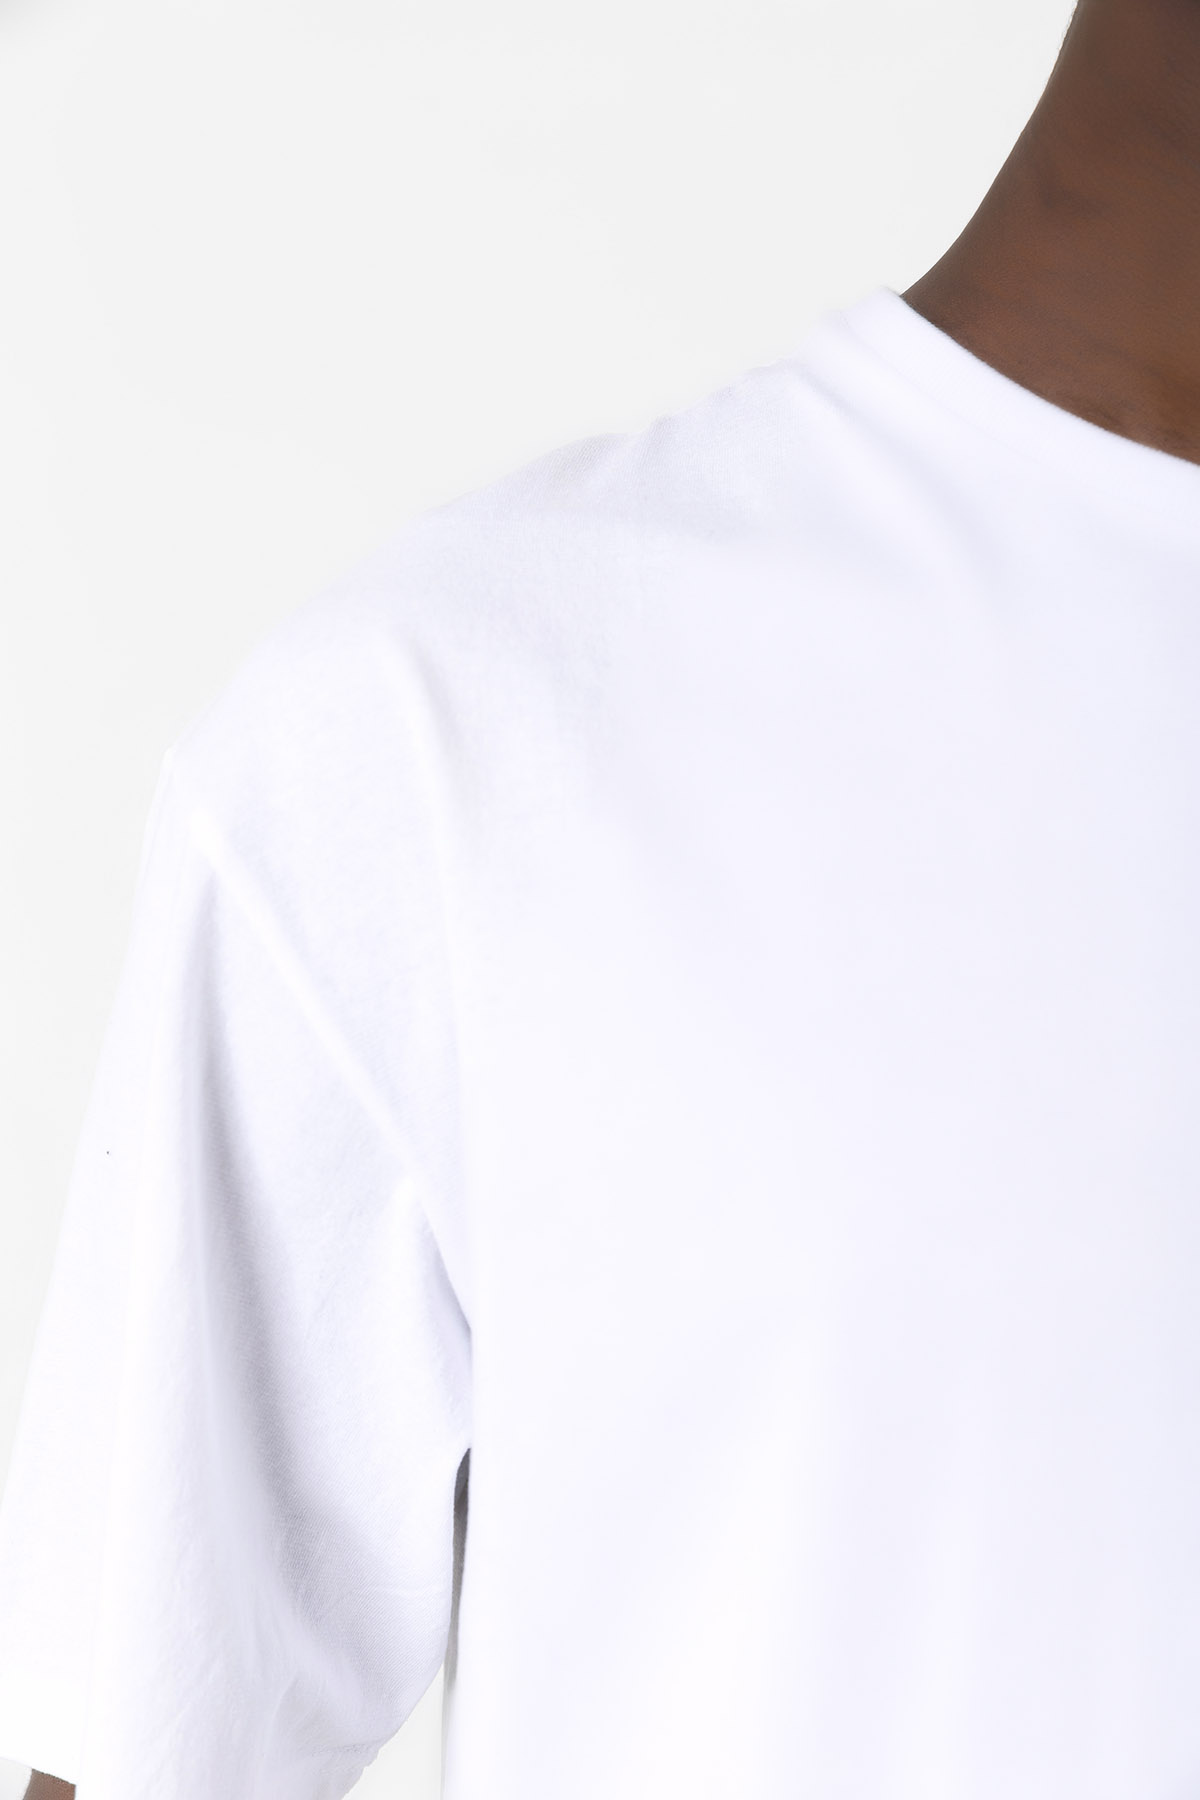 Beyblade Logo Beyaz Erkek Oversize Tshirt